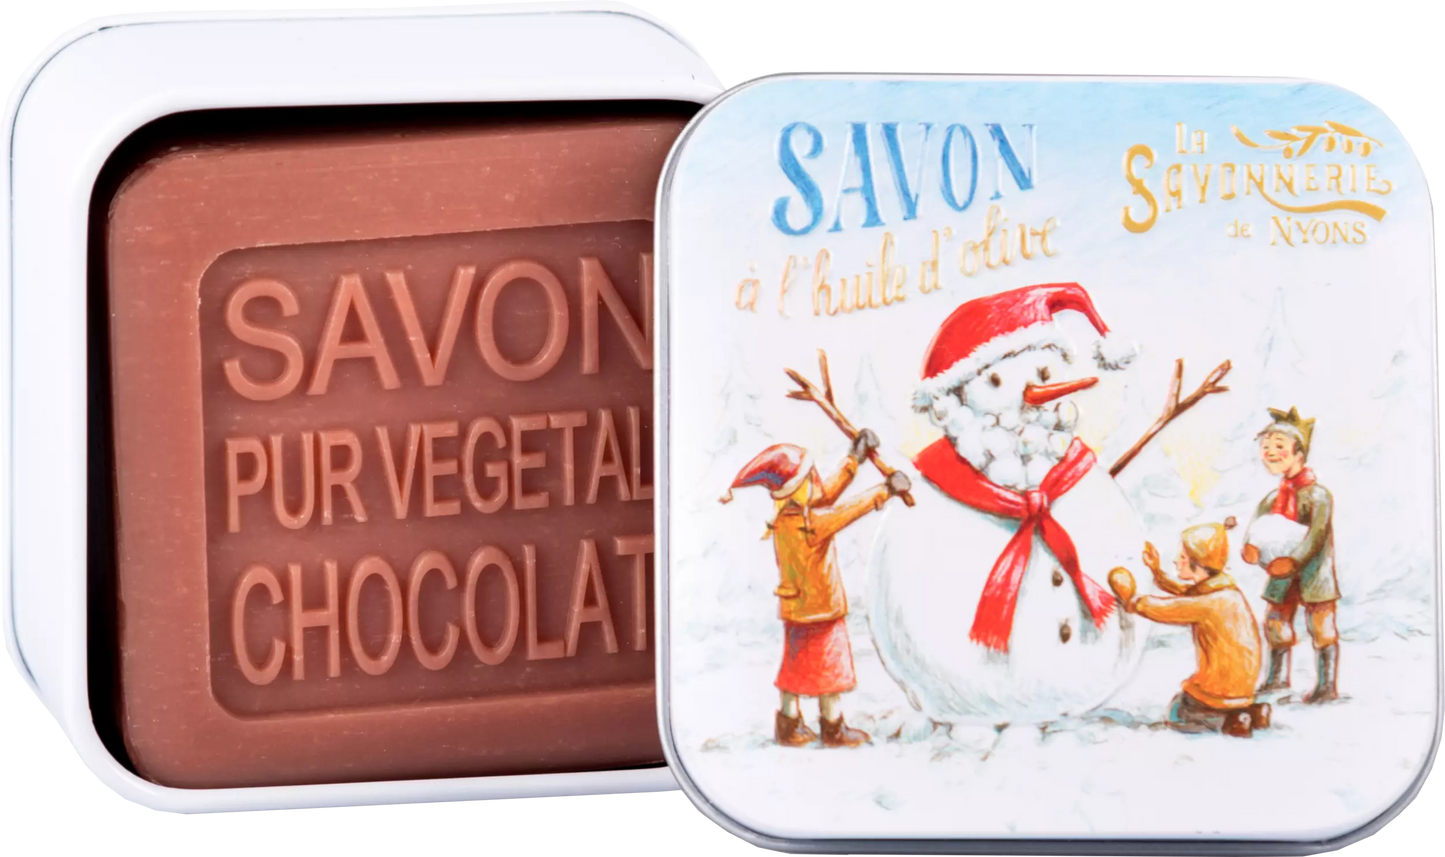 Soap 100g in a tin box "NOËL 3 Bonhomme de Neige" - Chocolate